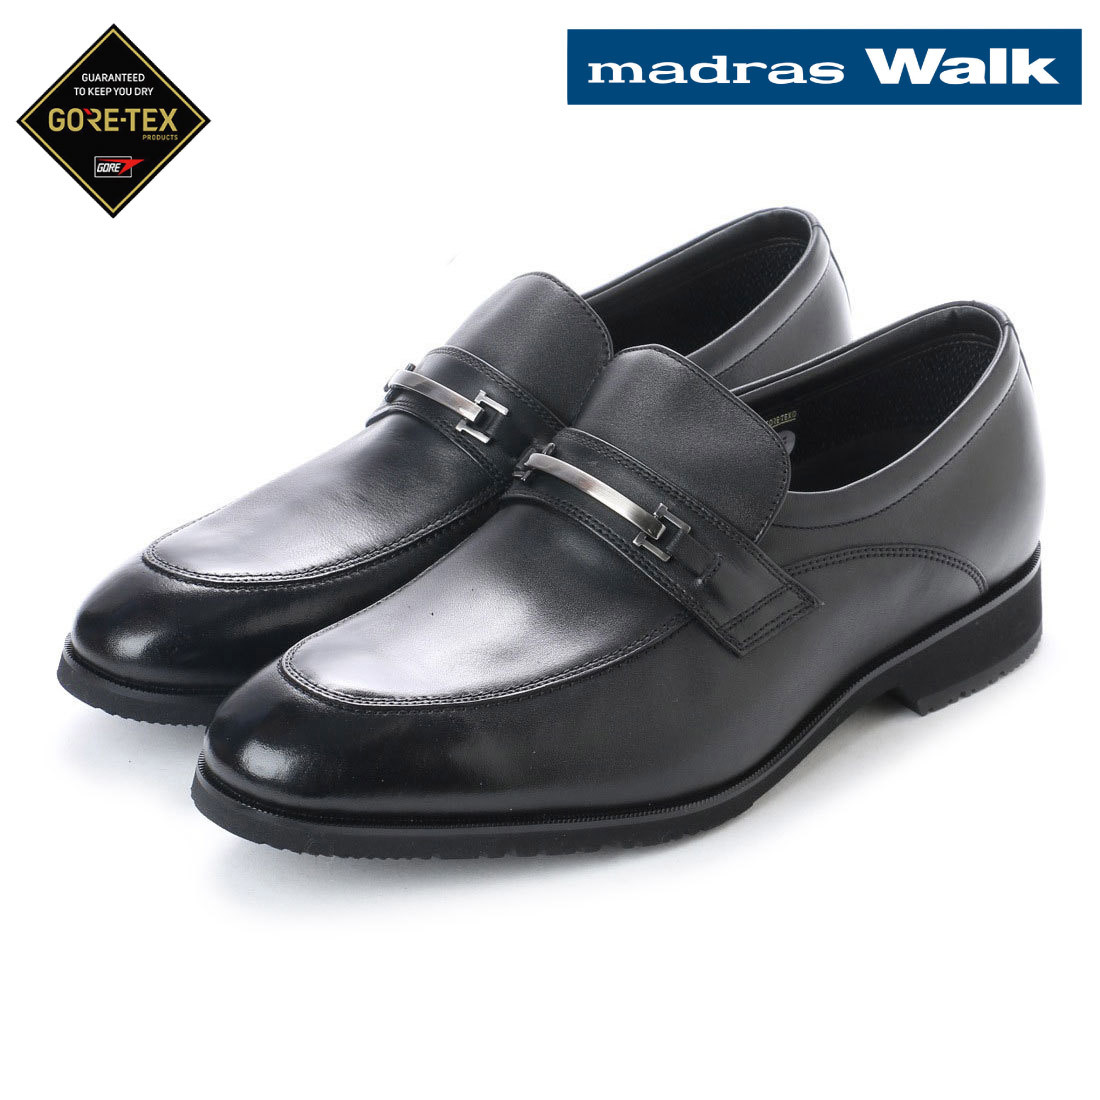 新製品情報も満載 △madras Walk (0910010299-bk-s255) 25.5cm 黒